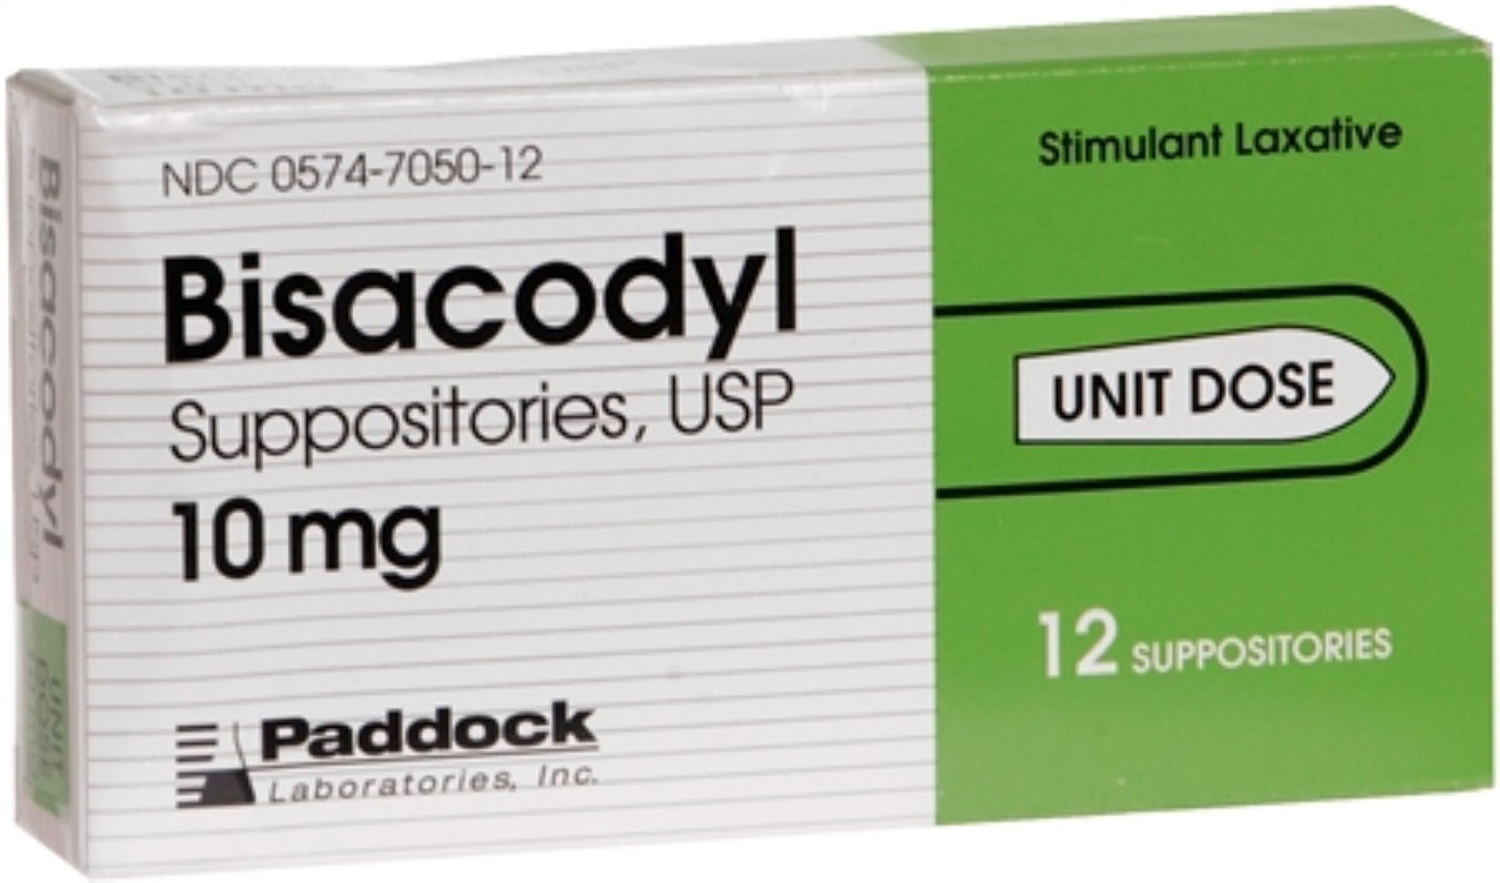 Bisacodyl Laxative Dosage Uses Contraindications Side Effects